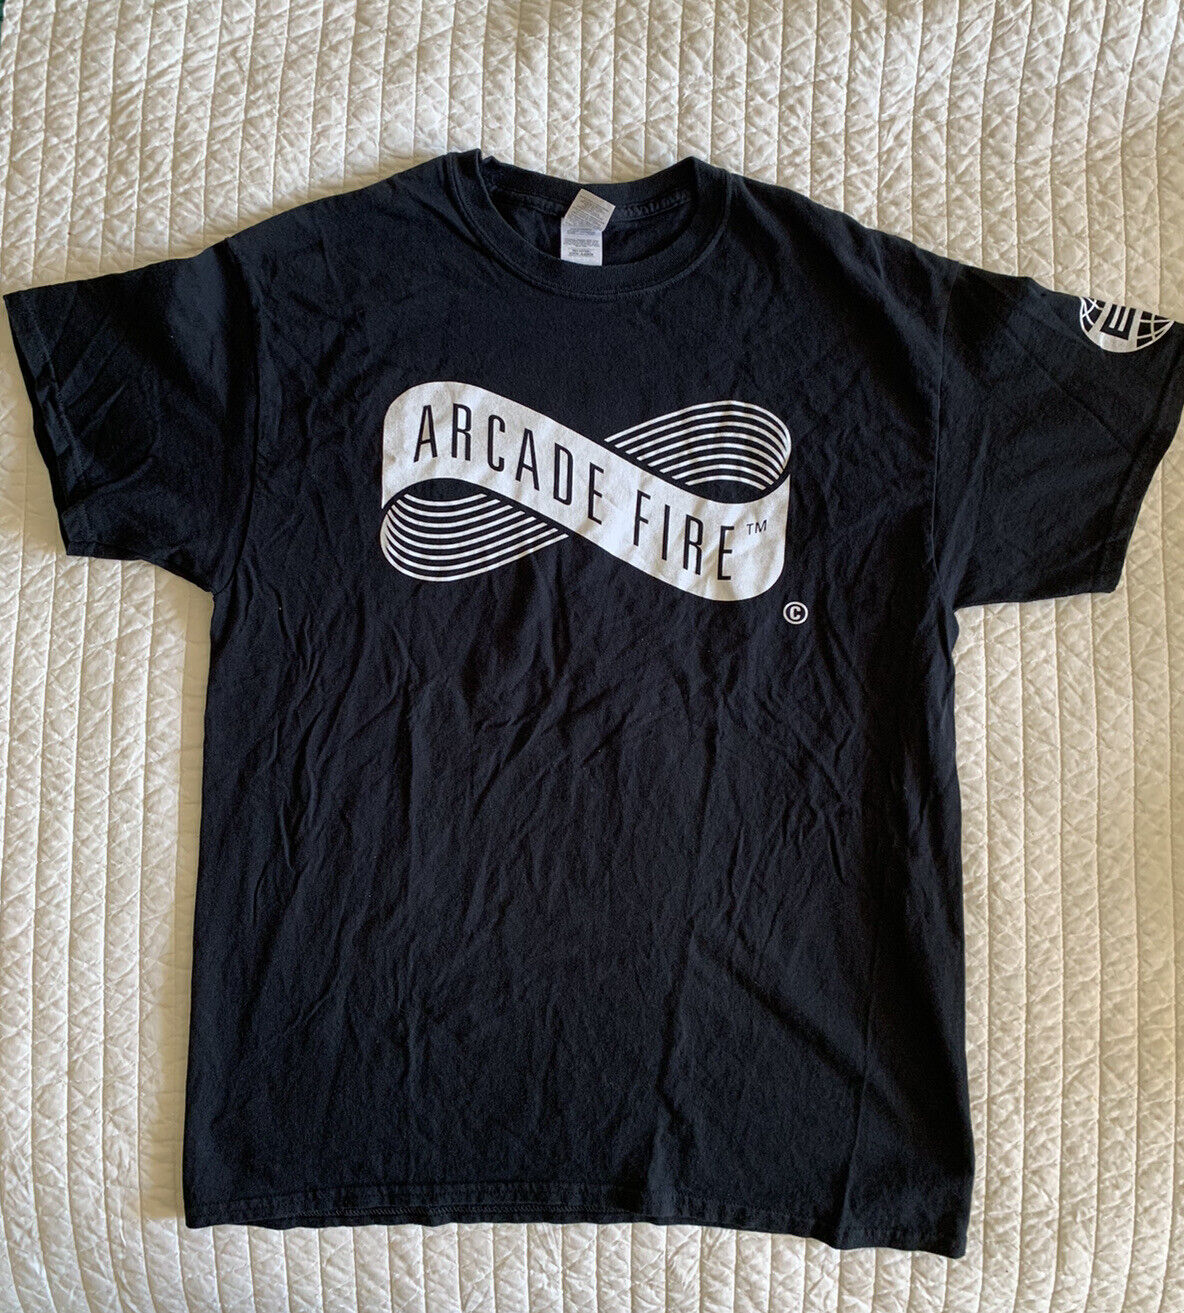 Arcade Fire Infinite Content 2017 Tour Band Shirt - Size: Large